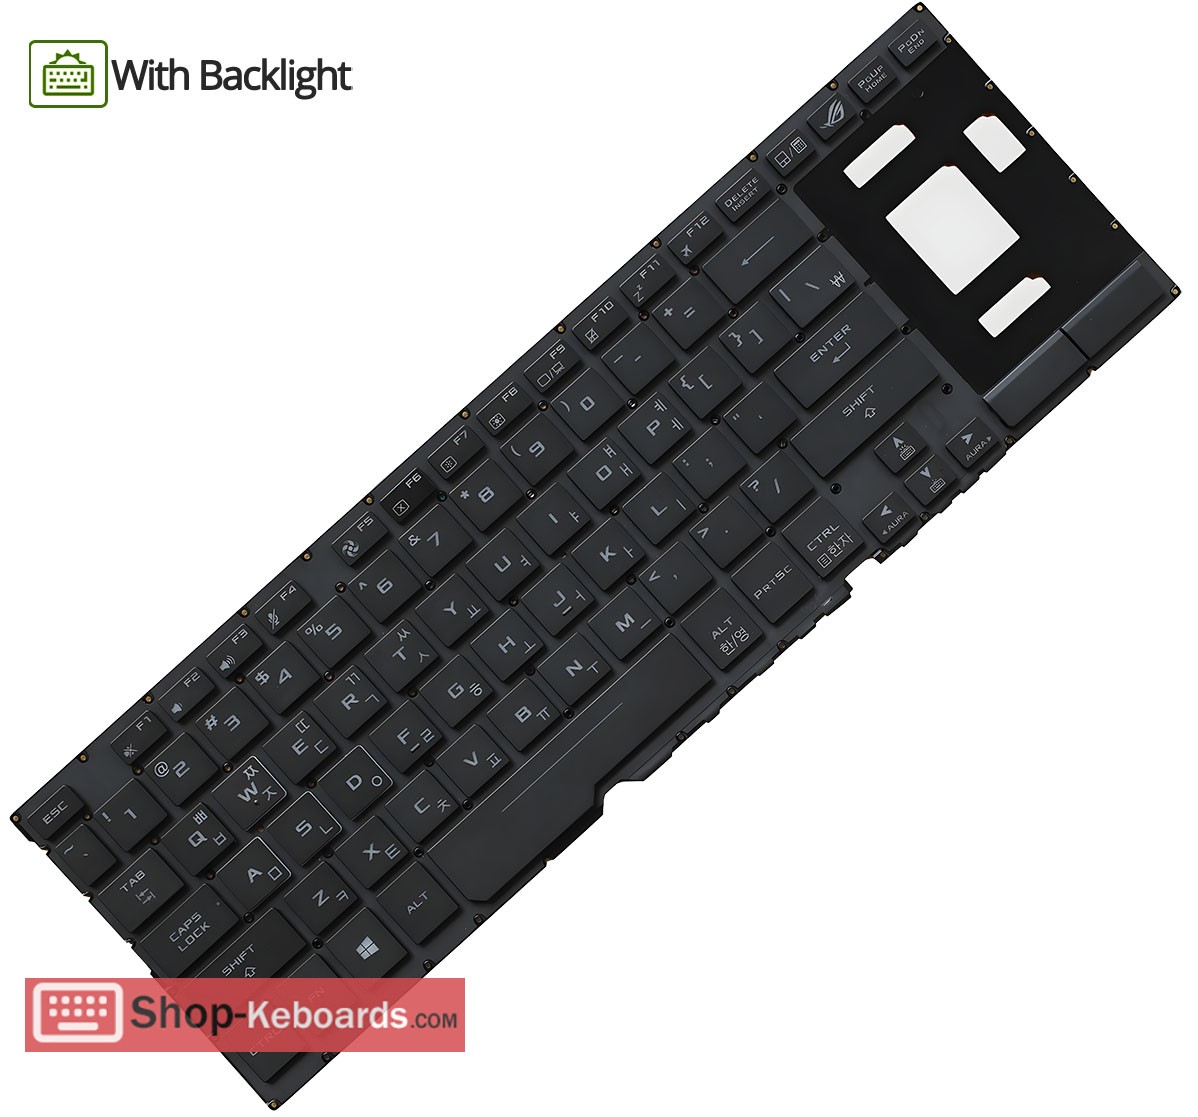 Asus ROG rog-gx531gm-dh74-DH74  Keyboard replacement